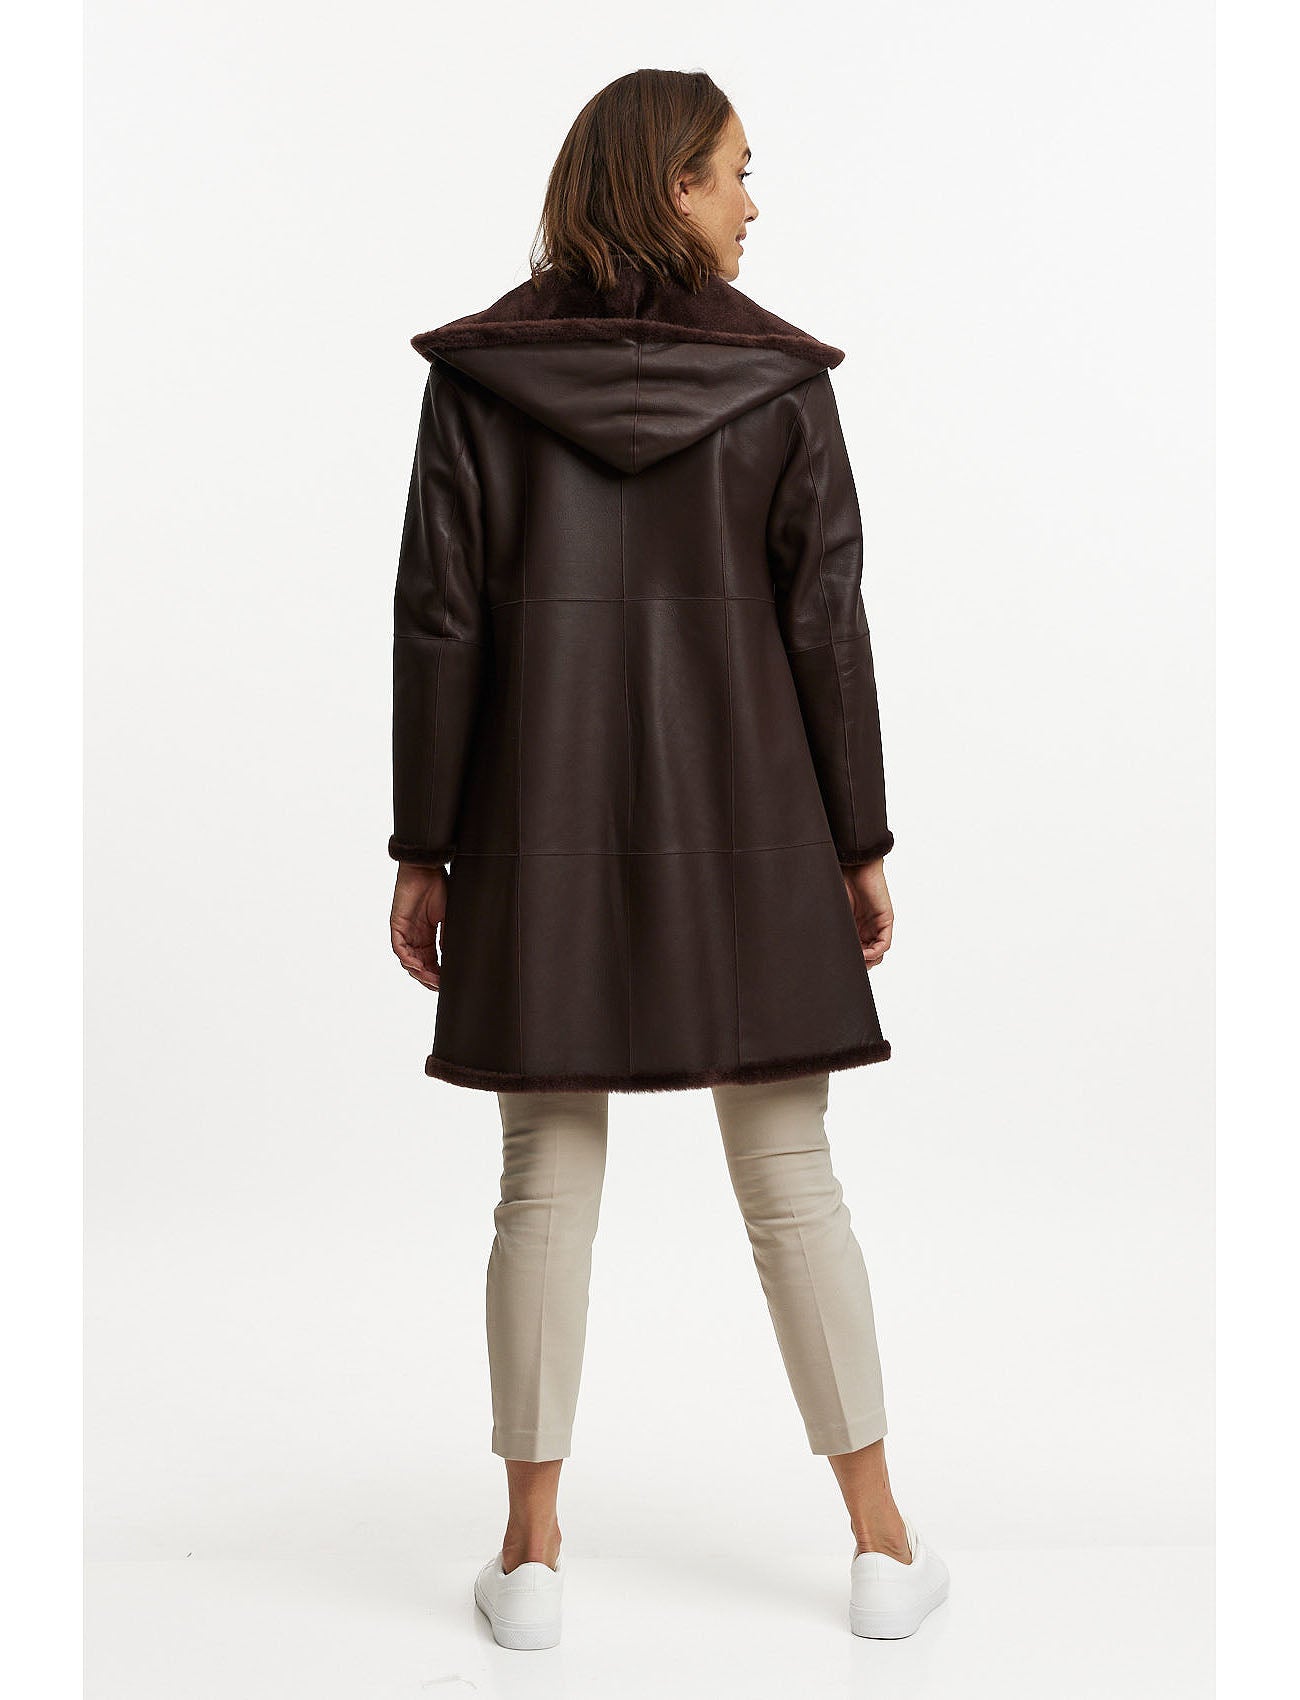 Merino lambskin jacket reversible 2in1 - brown